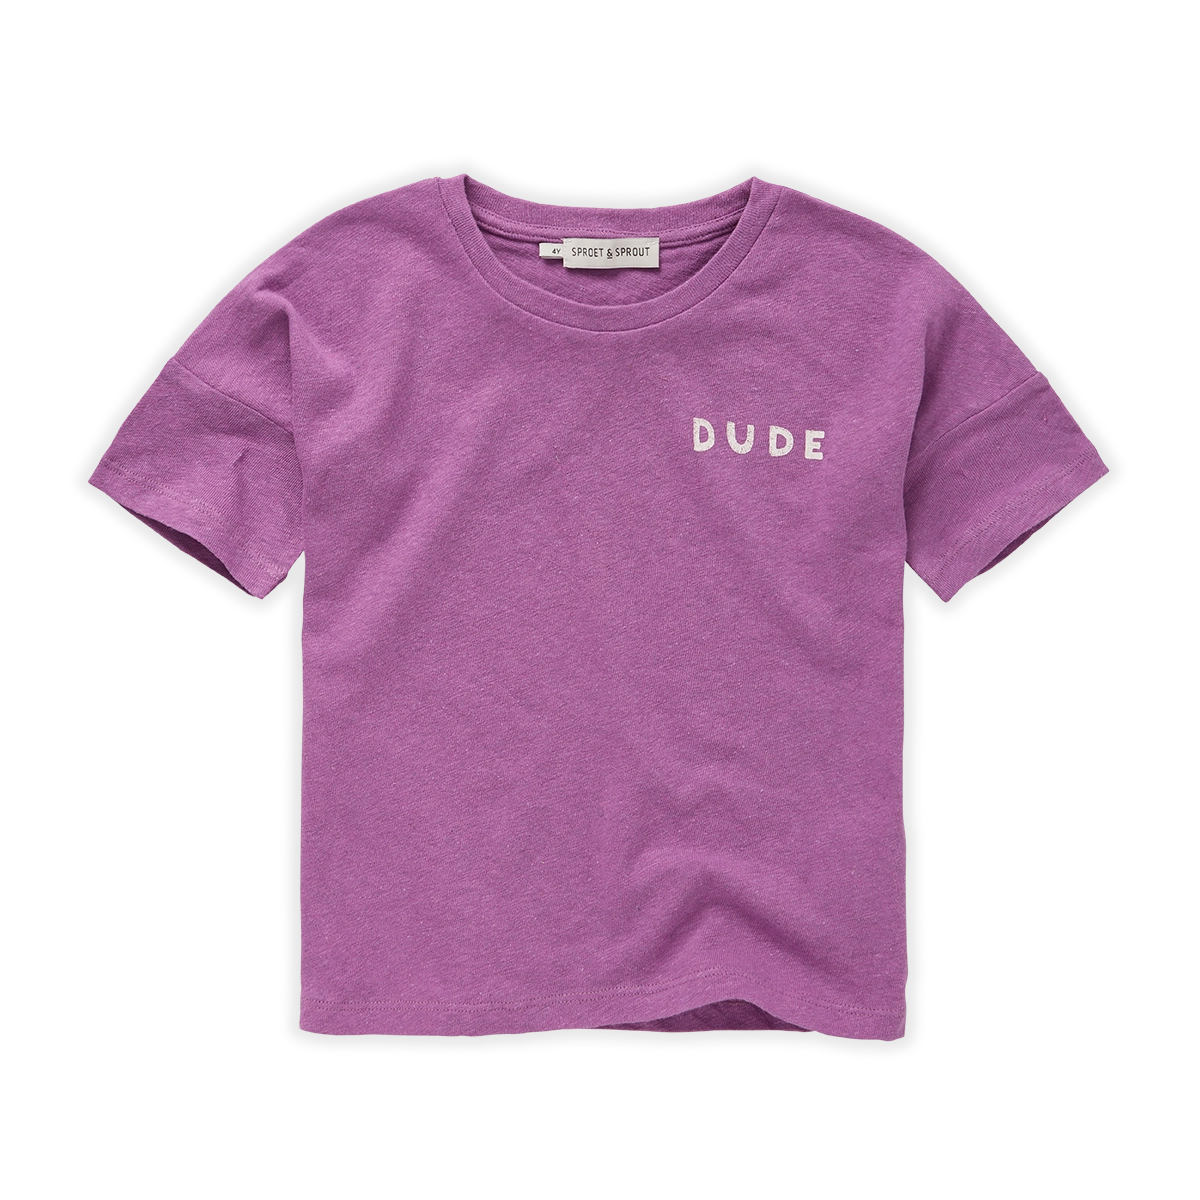 Sproet & Sprout - tshirt linen dude - purple